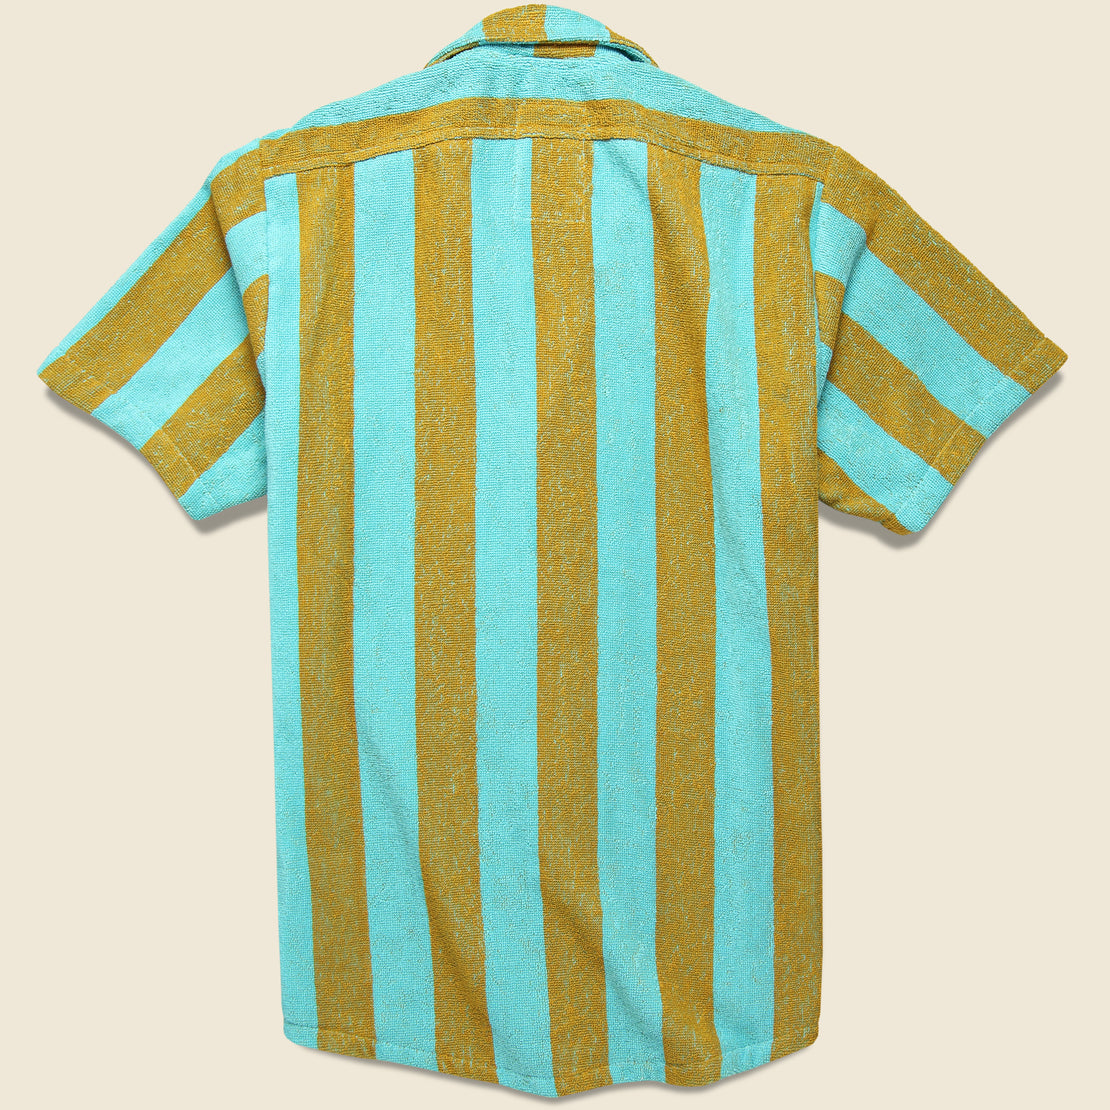 Turcs Terry Shirt - Teal/Gold Stripe